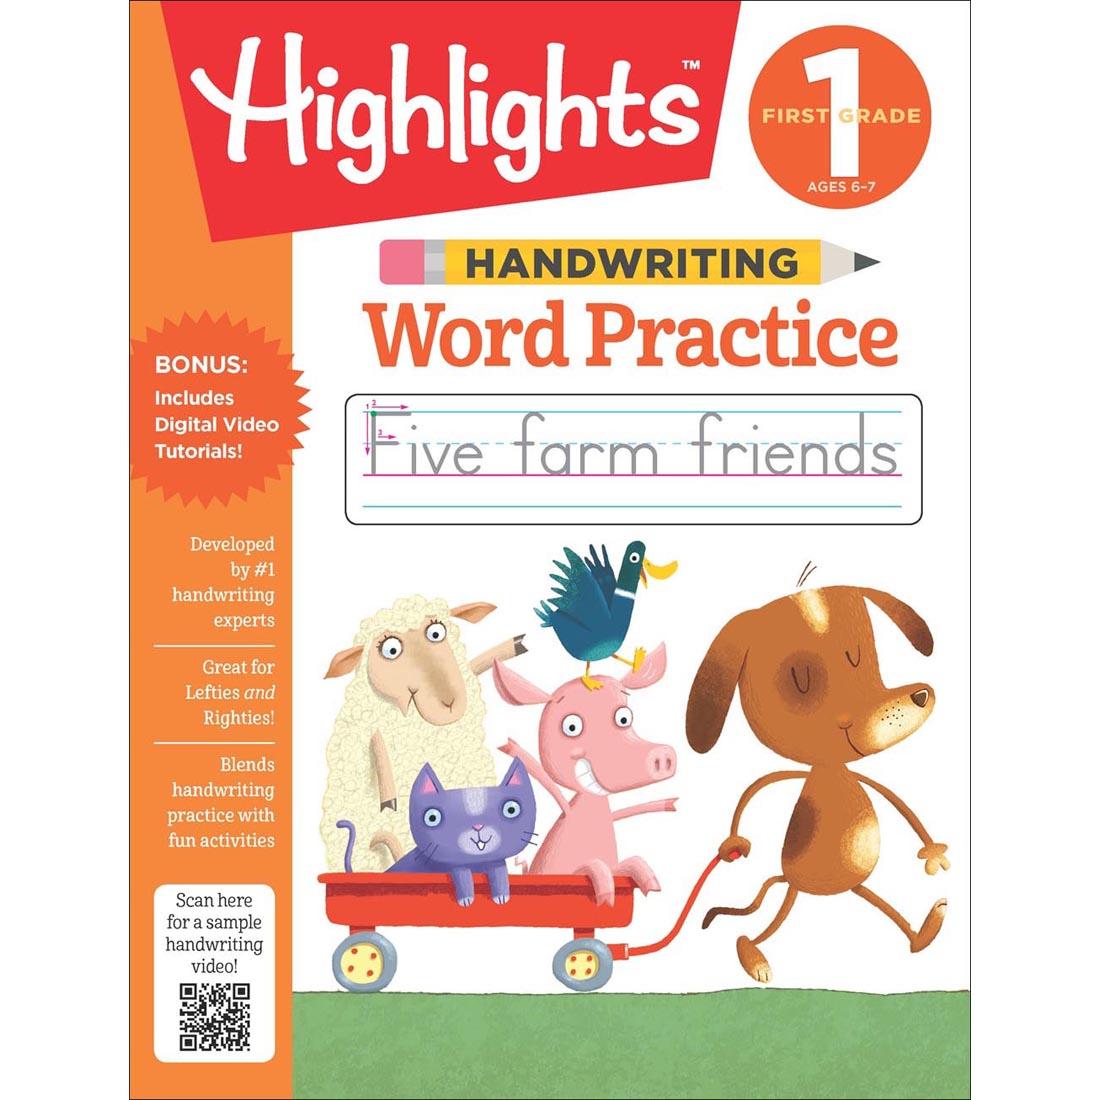 Highlights Handwriting Word Practice Pad